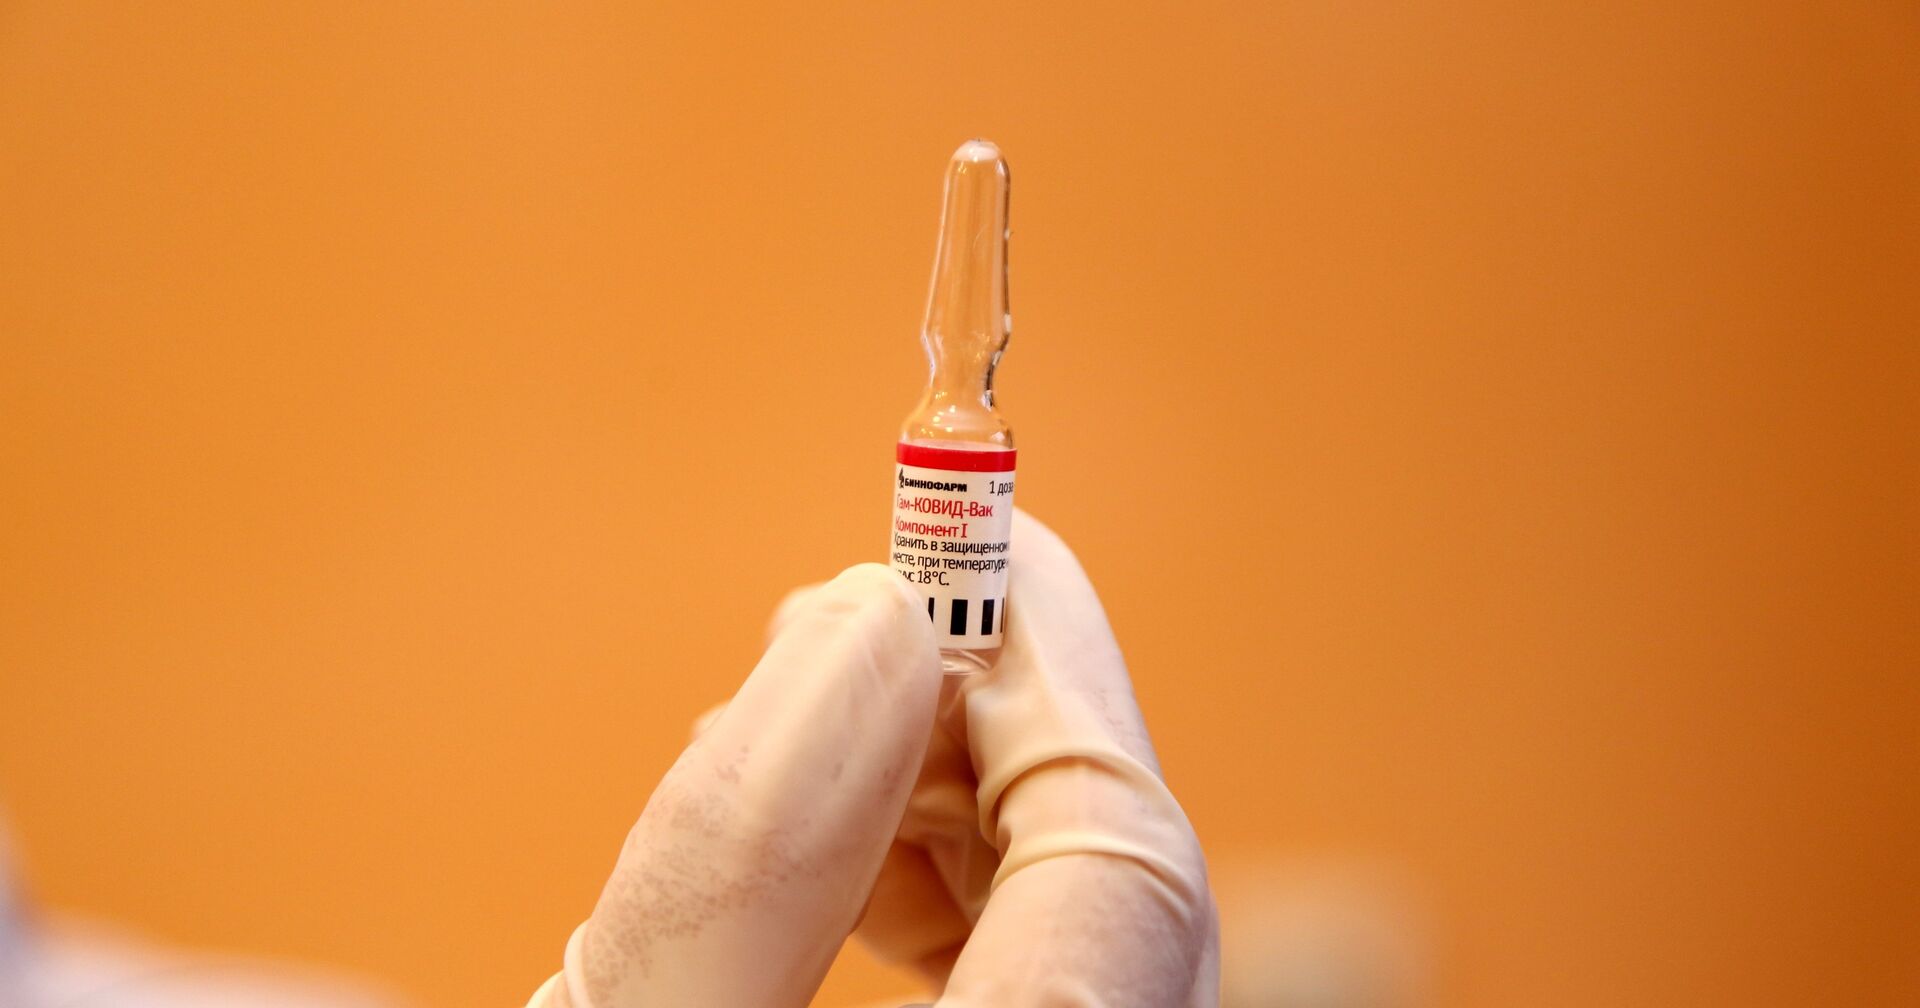 Медицинский работник держит в руке вакцину от COVID-19 Спутник-V (Гам-КОВИД-Вак) - ИноСМИ, 1920, 05.02.2021